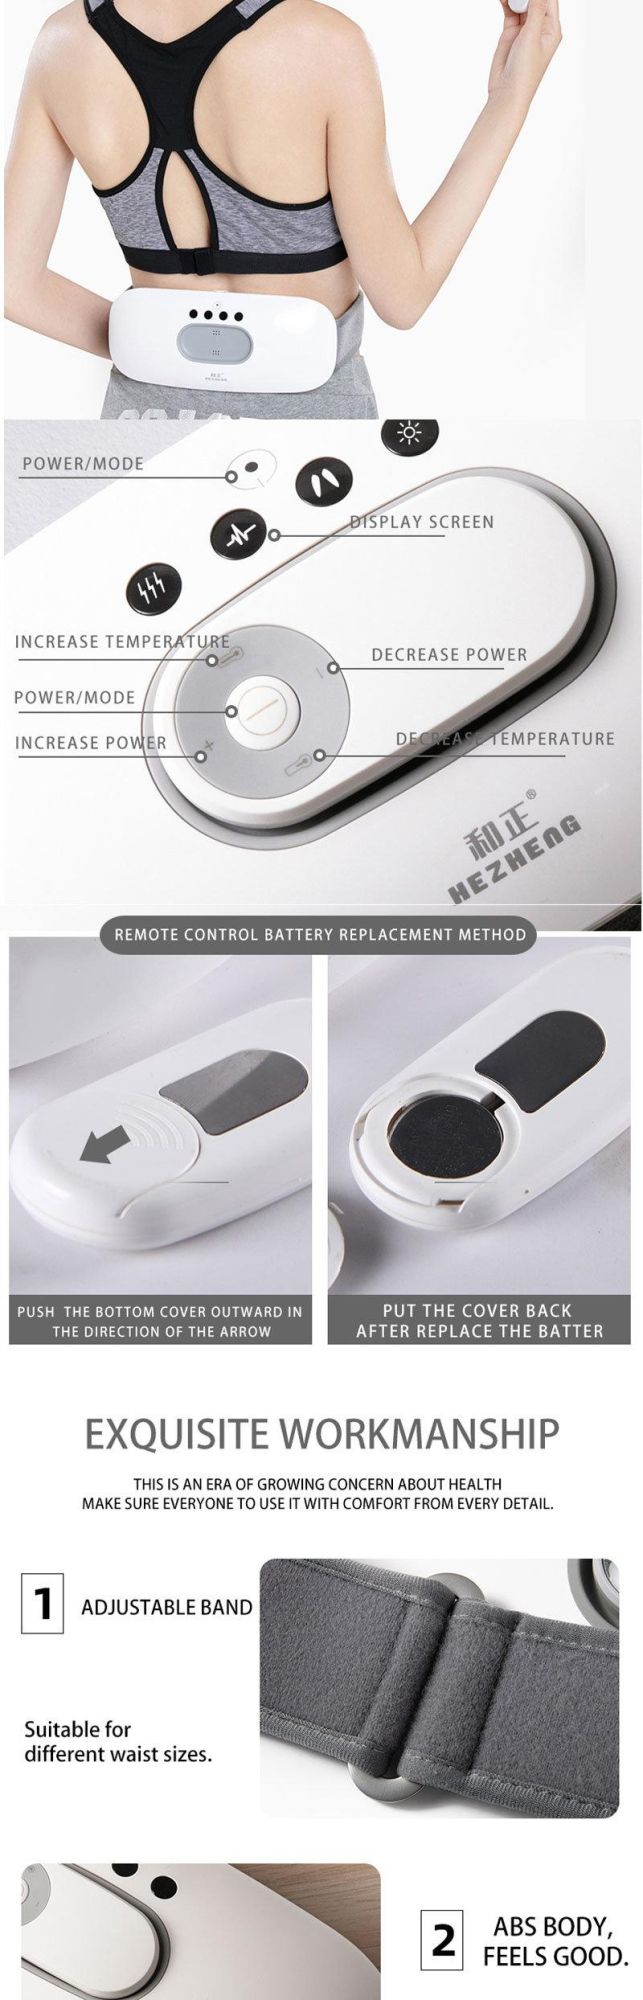 Hezheng Medical Factory Price Waist Shiatsu Electrical Air Pressure Pulse Slimming Vibrating Belt Waist Massager